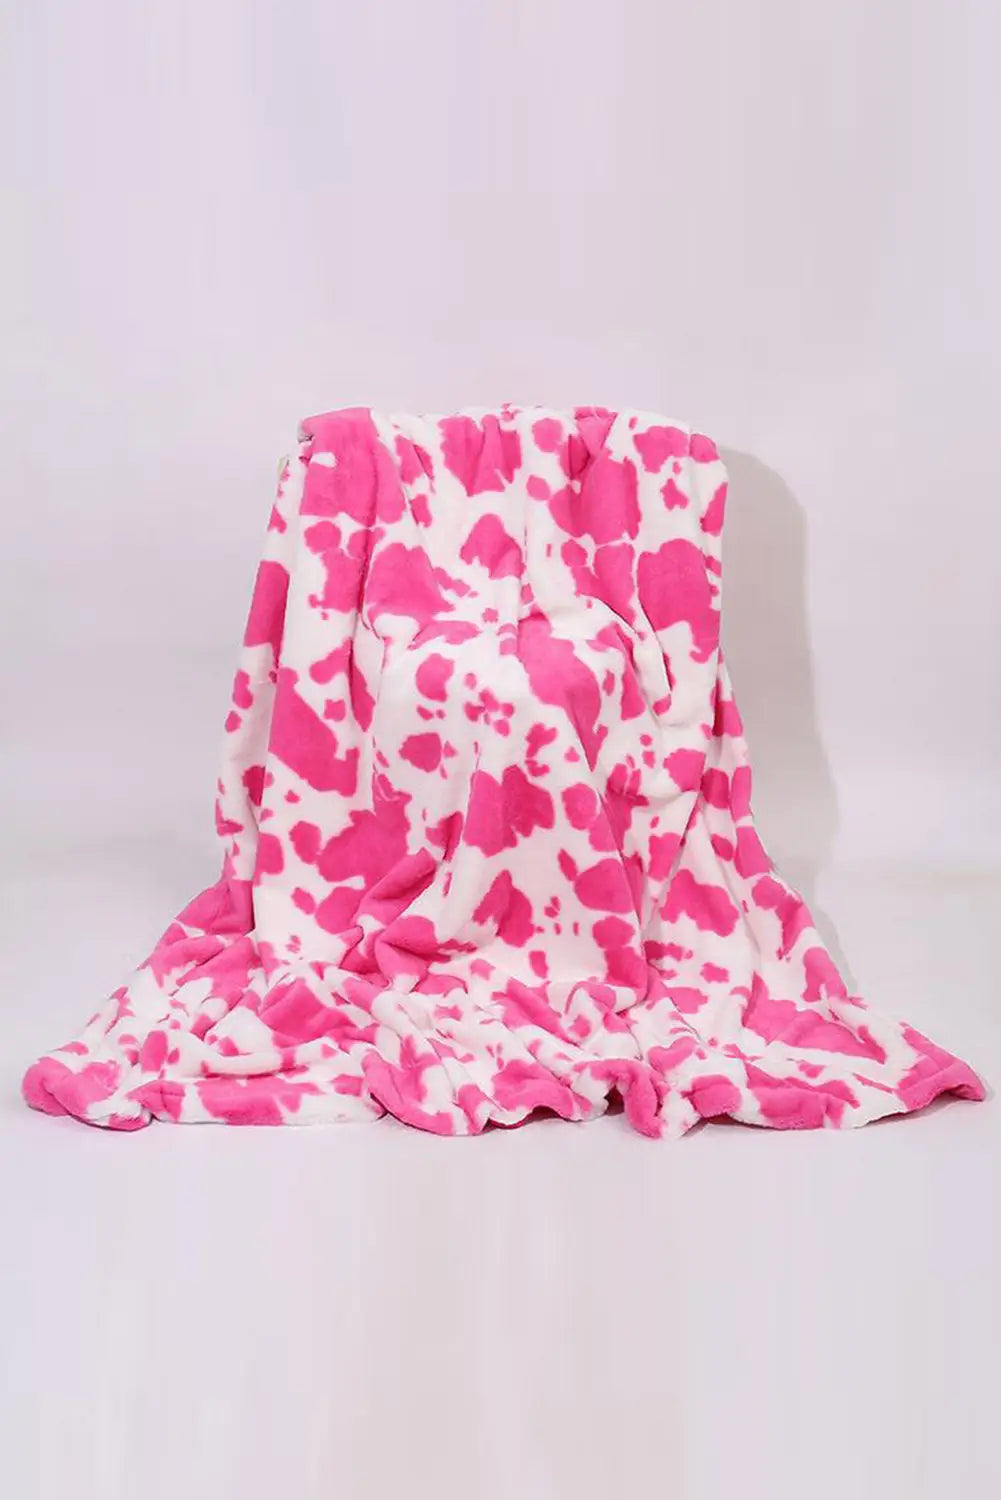 Dark pink cow spot print flannel blanket - one size /